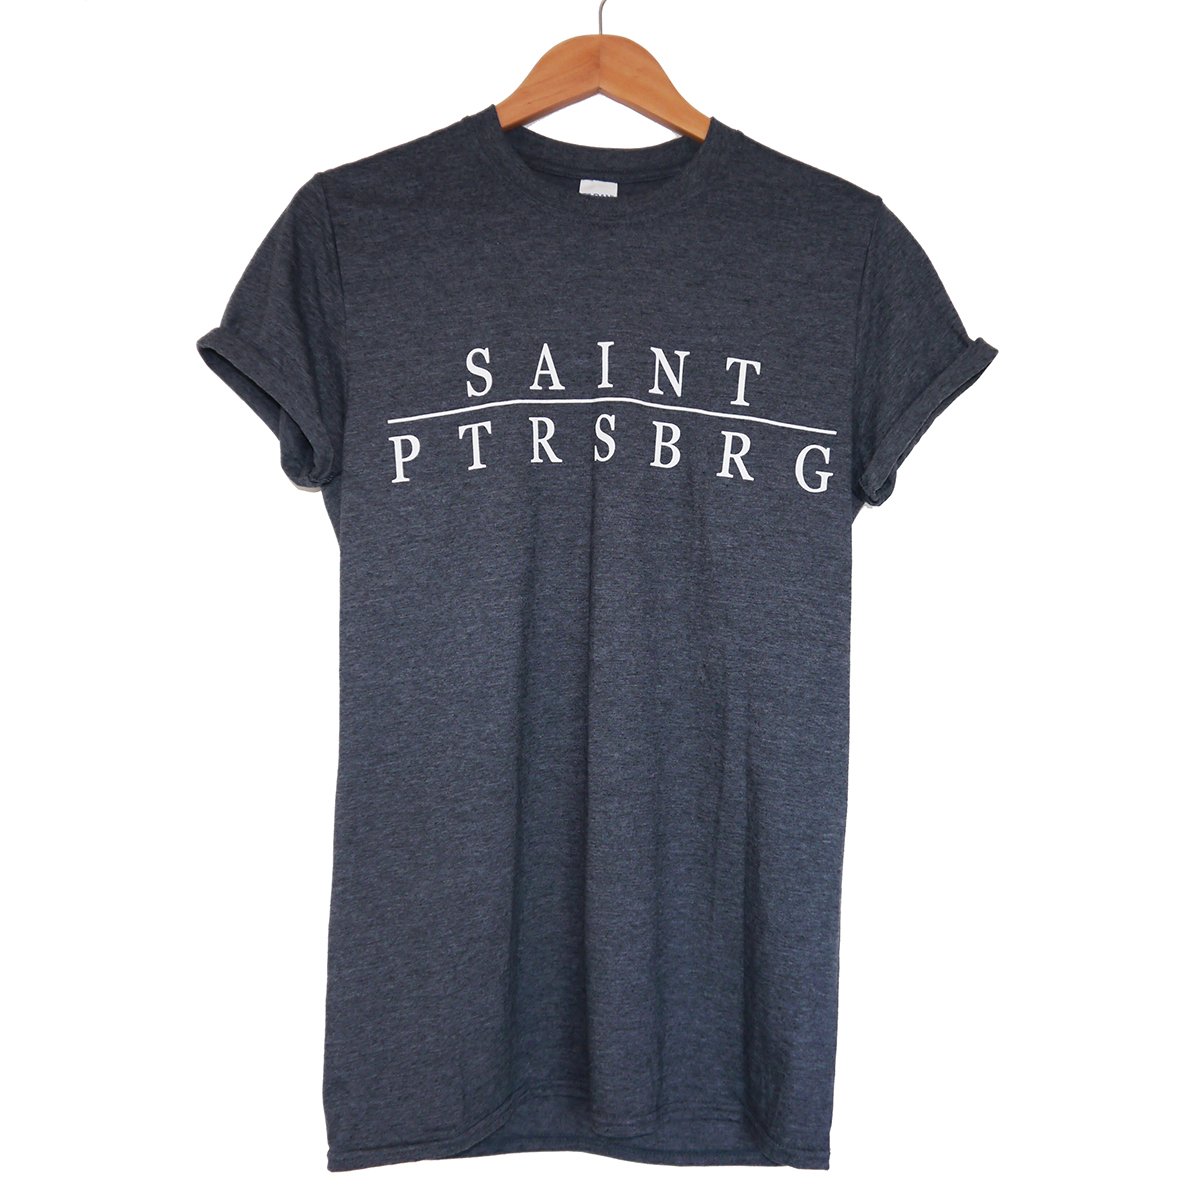 Image of SAINT PTRSBRG T-shirt - Grey